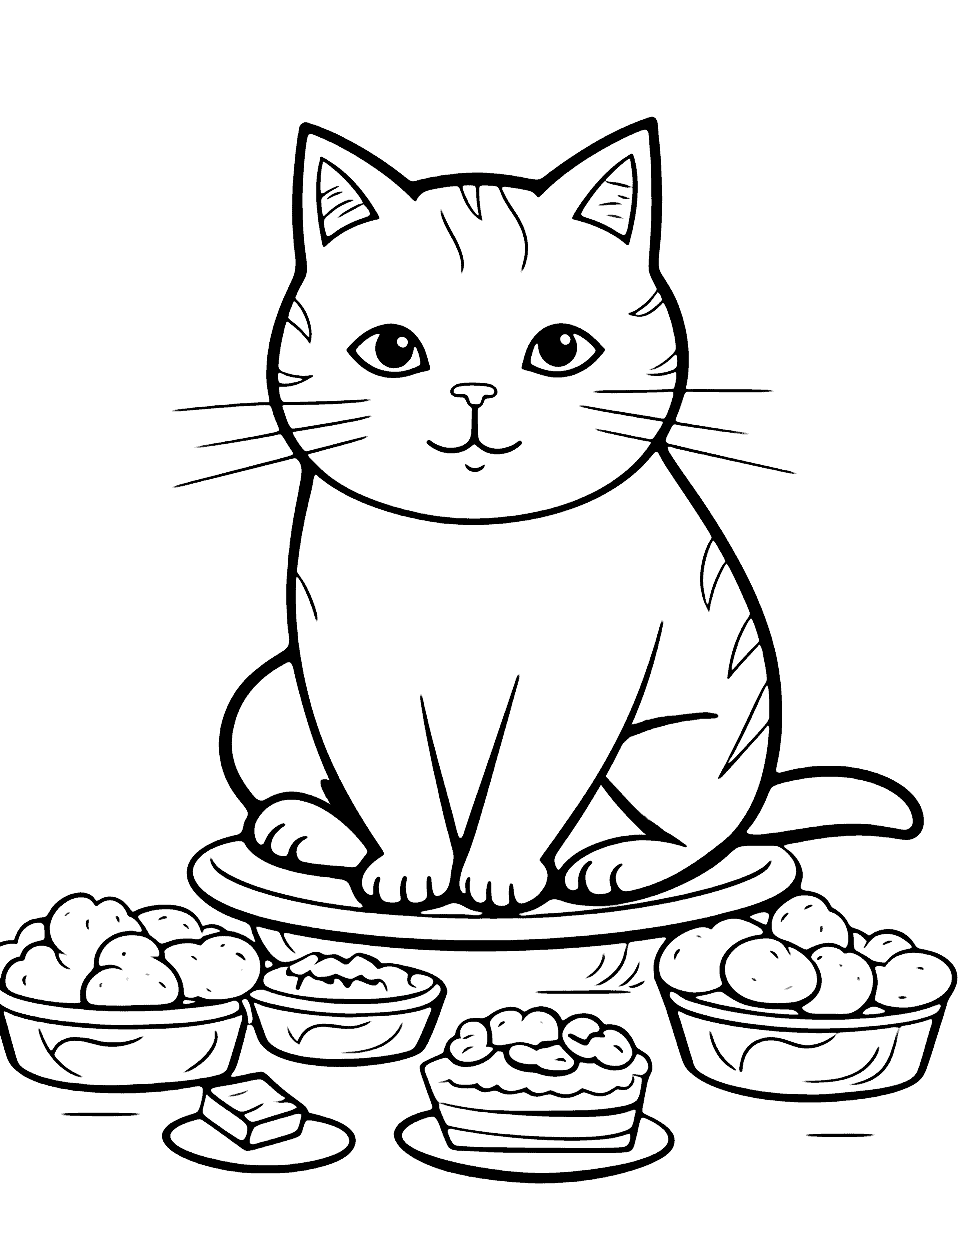 Pusheen Eating Dumplings Cat Coloring Page - Pusheen cat enjoying various types of dumplings and food.